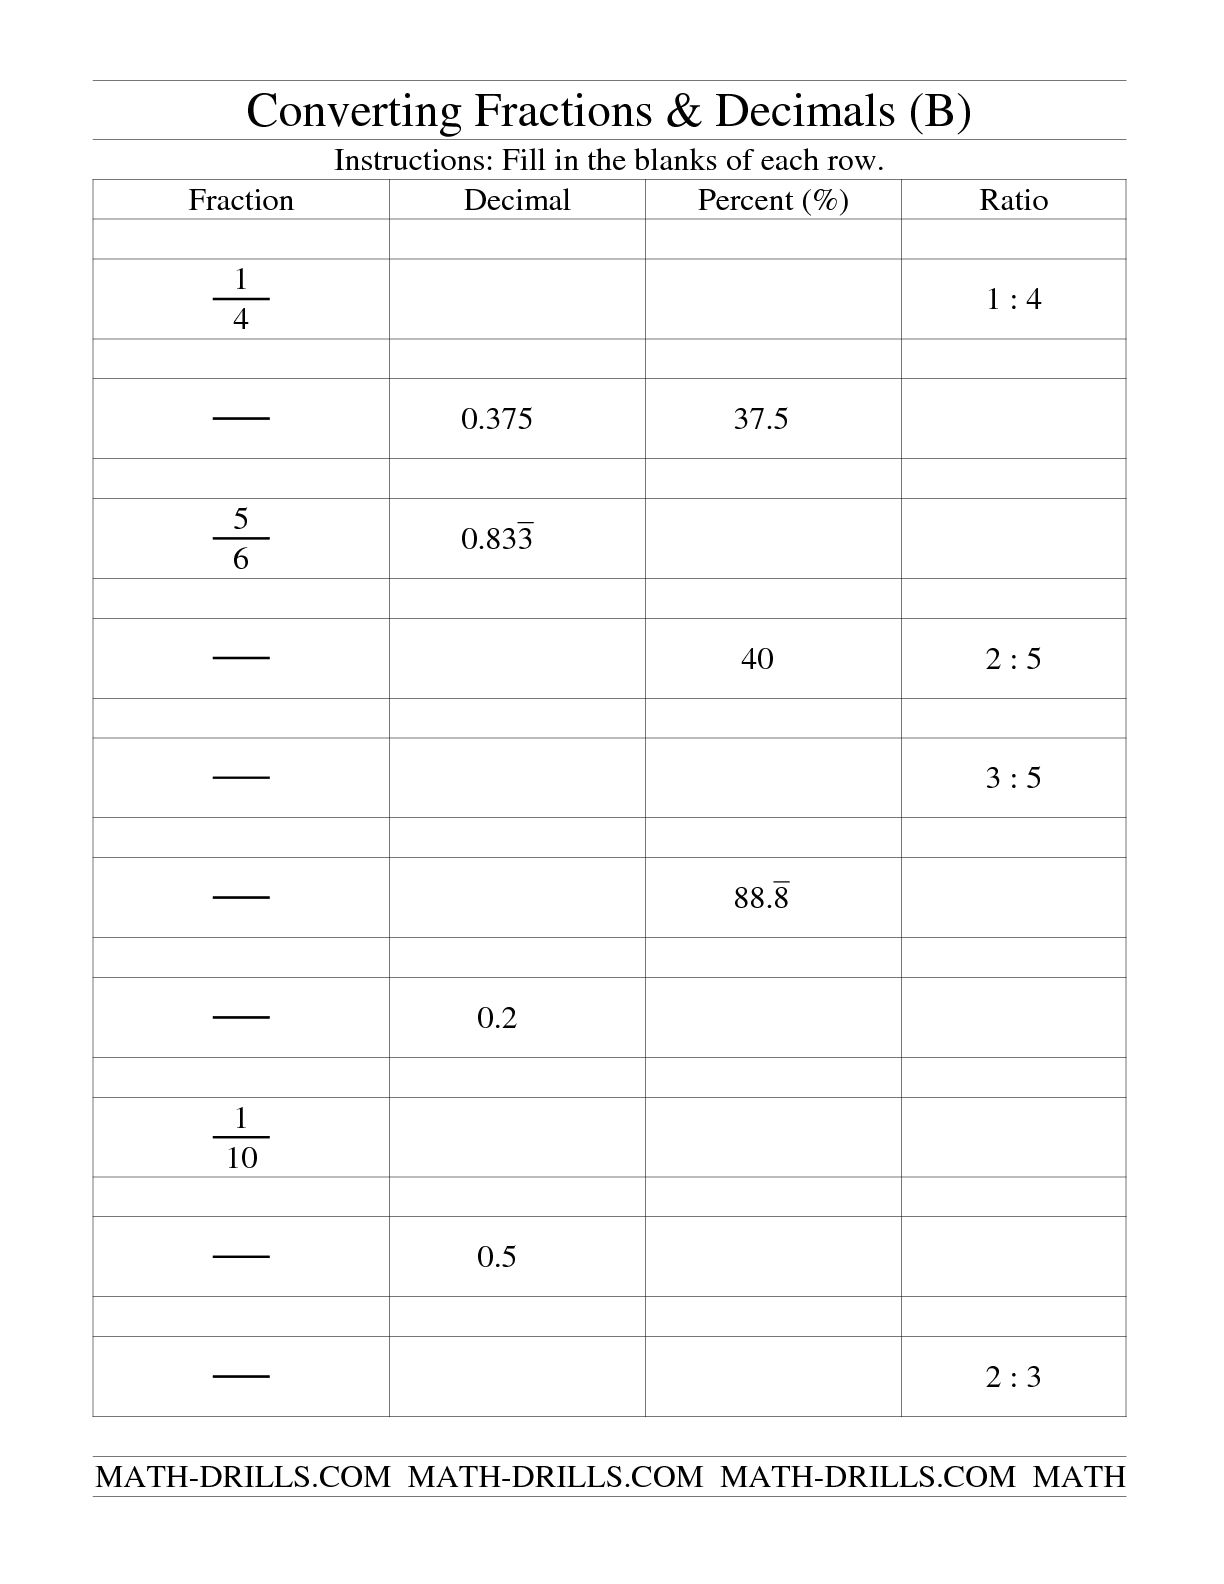 Converting Fractions Decimals and Percents Worksheets Image